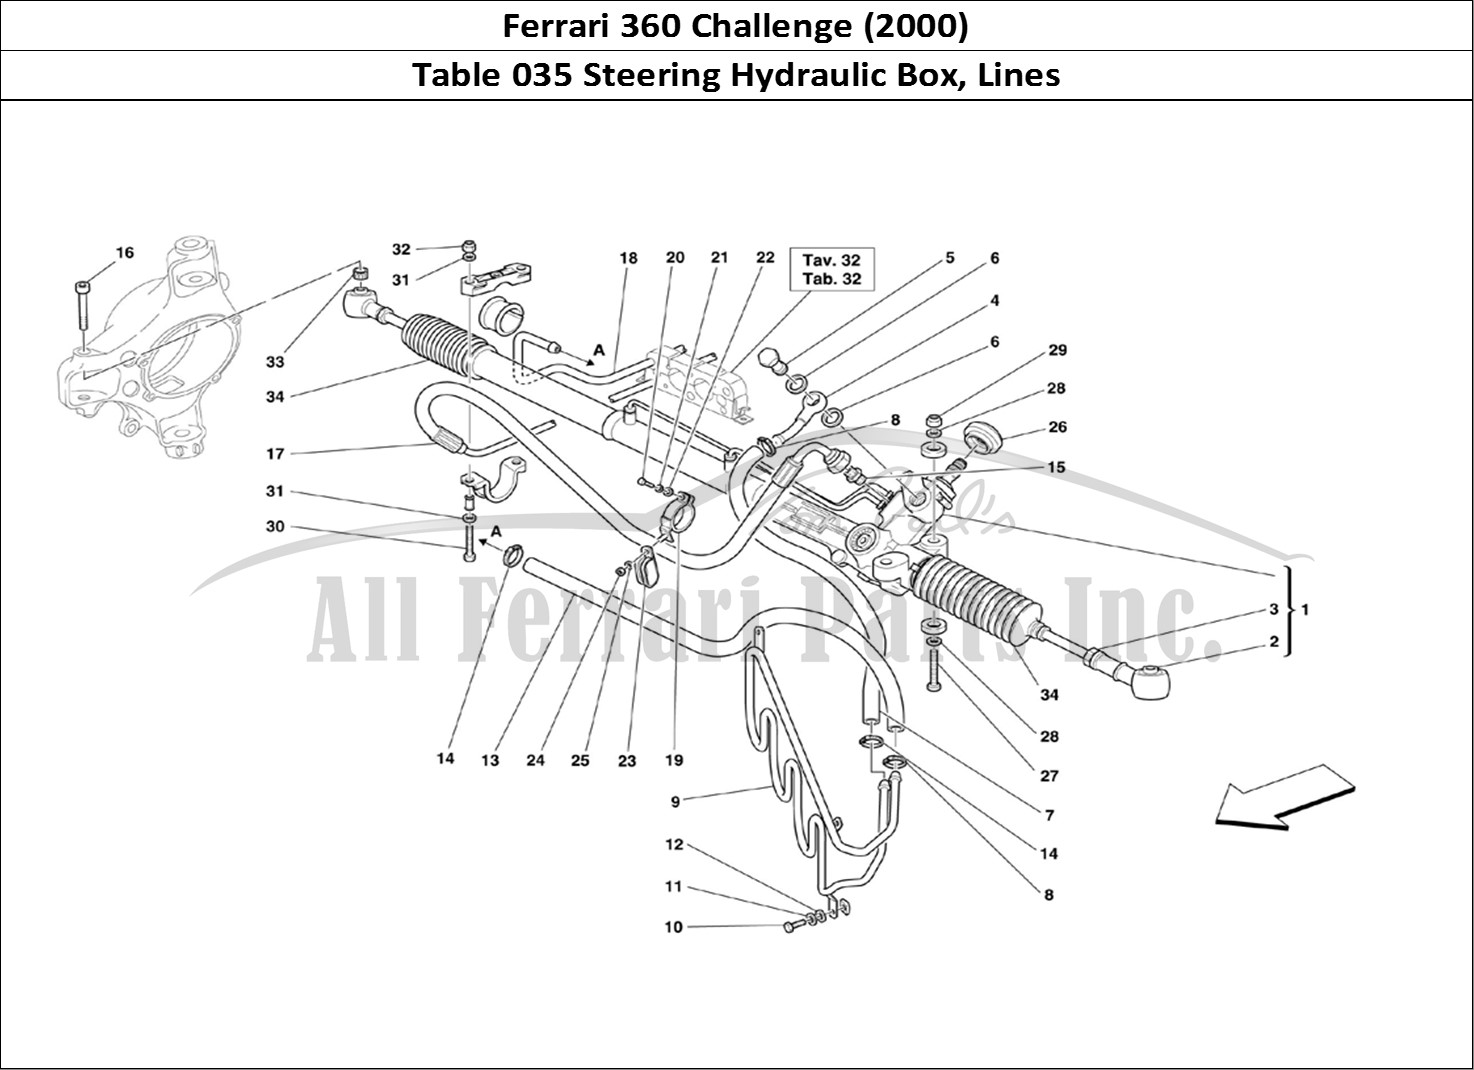 Ferrari Parts Ferrari 360 Challenge (2000) Page 035 Hydraulic Steering Box an